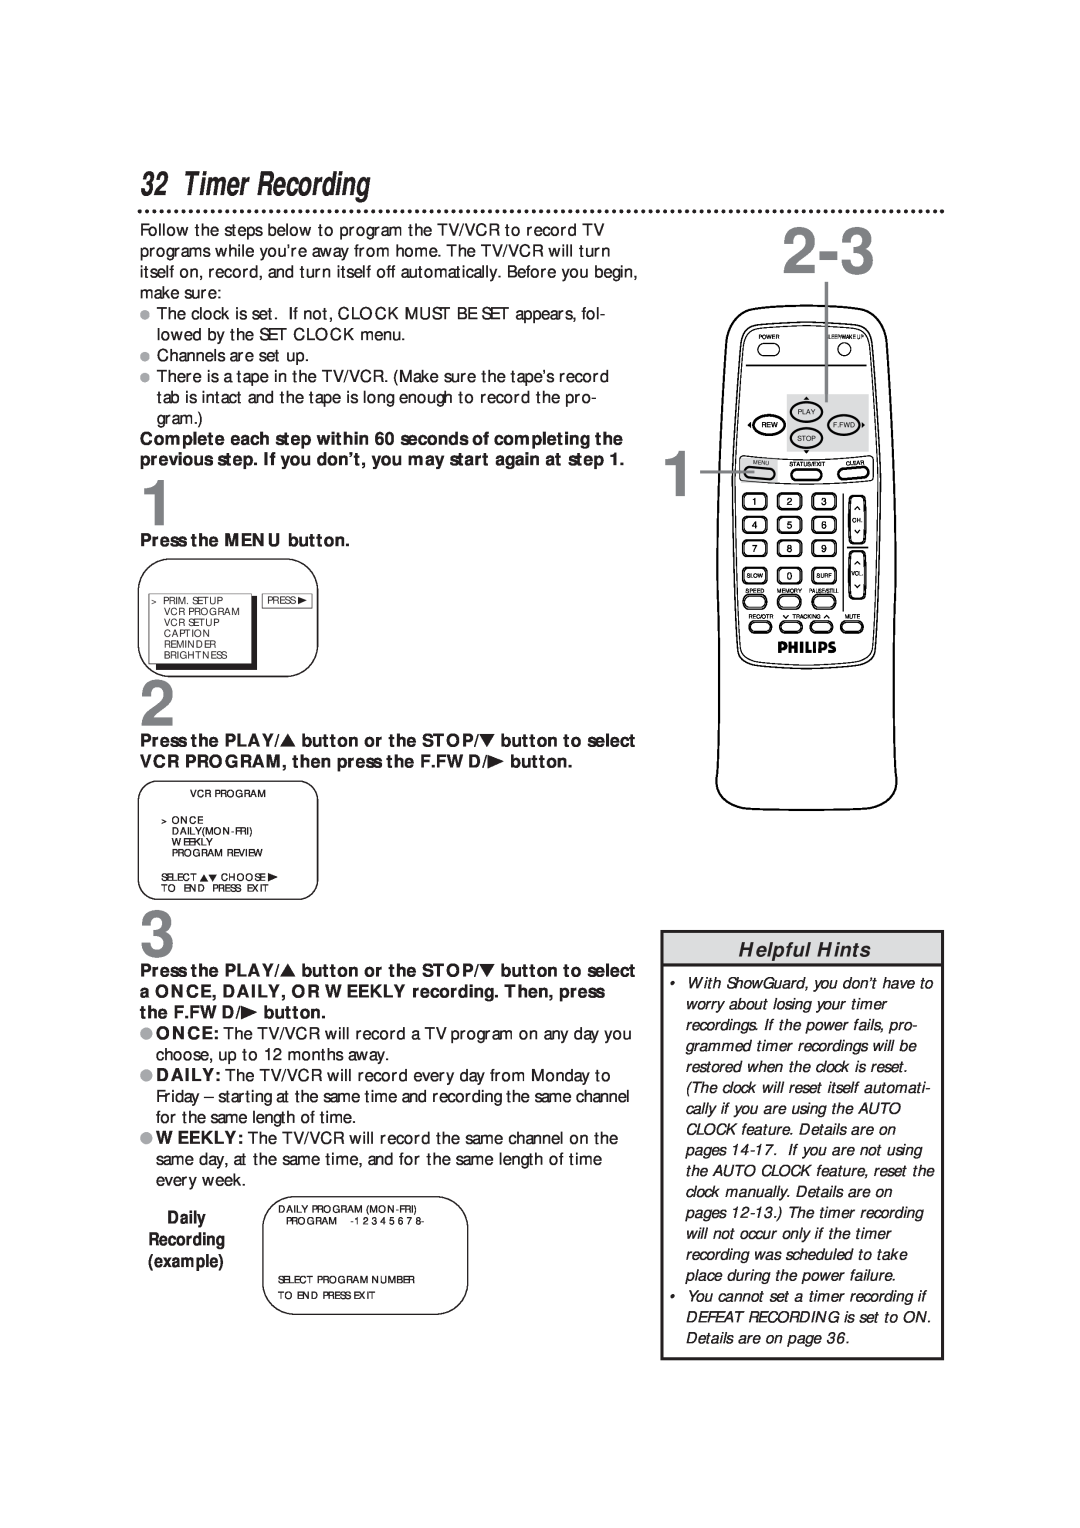 Magnavox CCB193AT owner manual Timer Recording, Helpful Hints, Recording example 